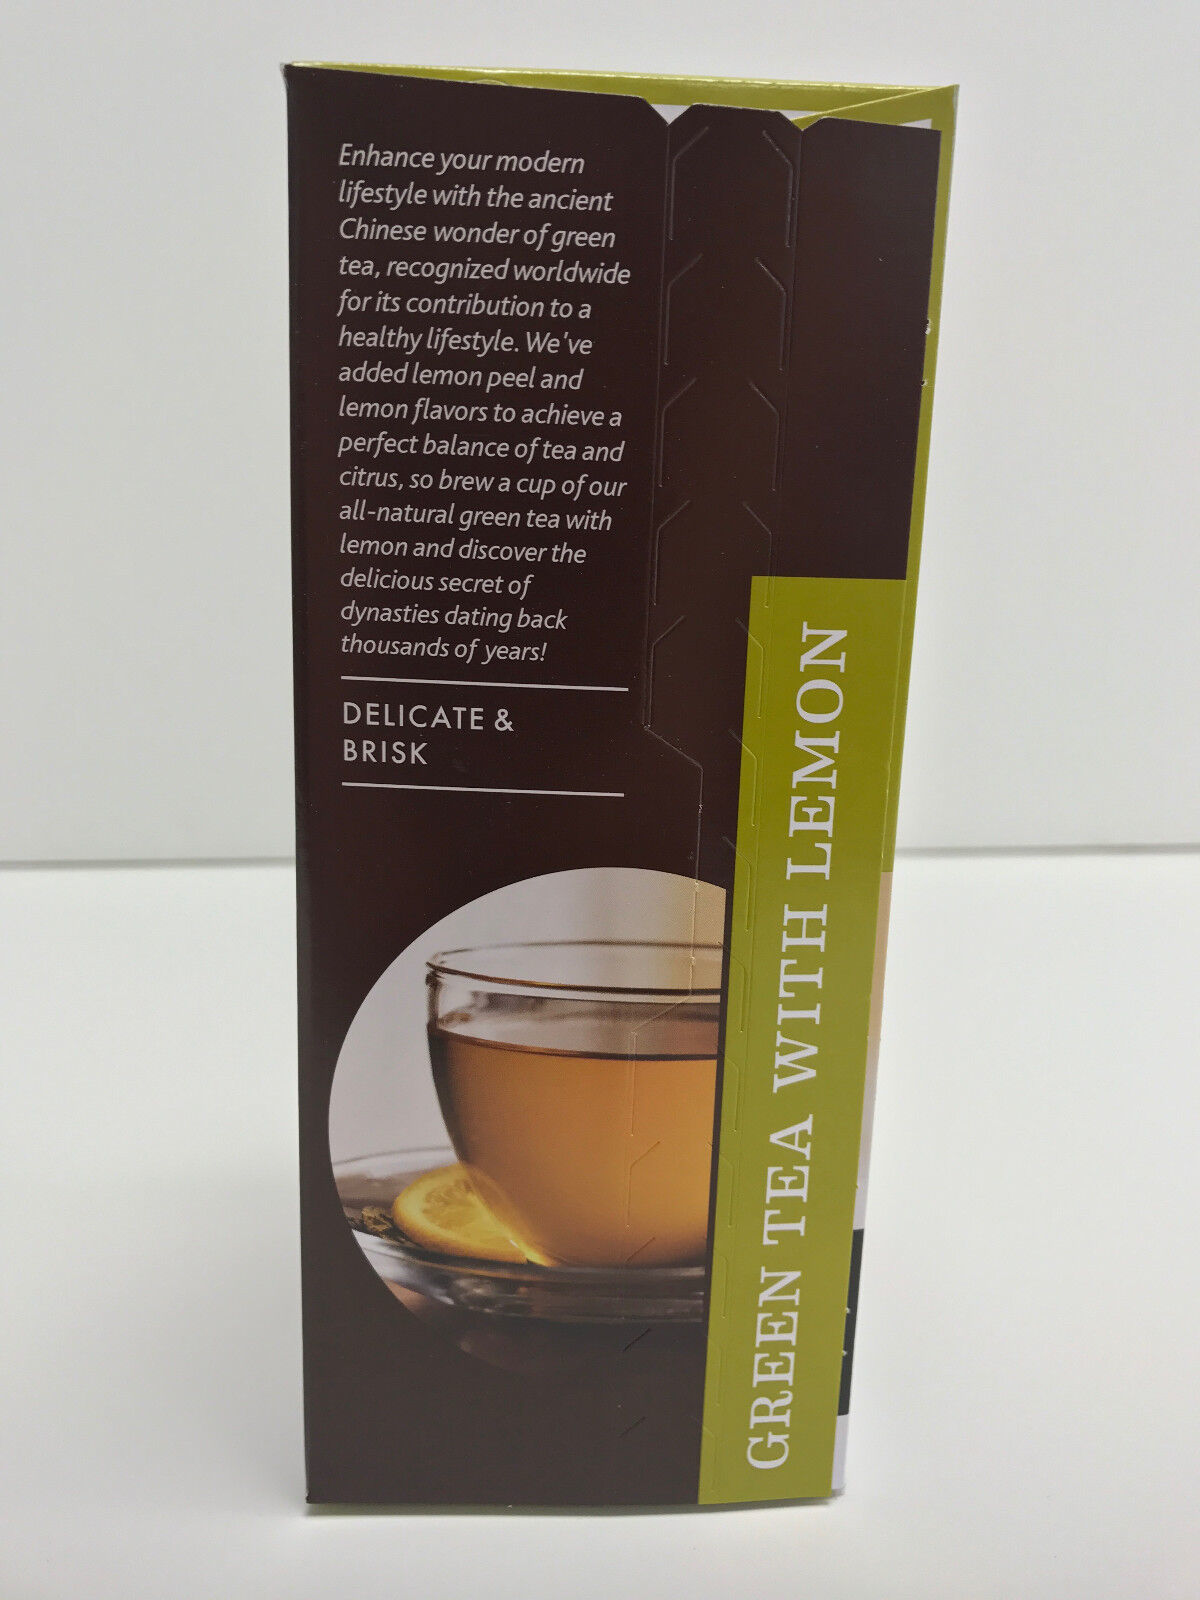 Farmer Brothers Premium Green Tea with Lemon, 25 ct box - $10.99